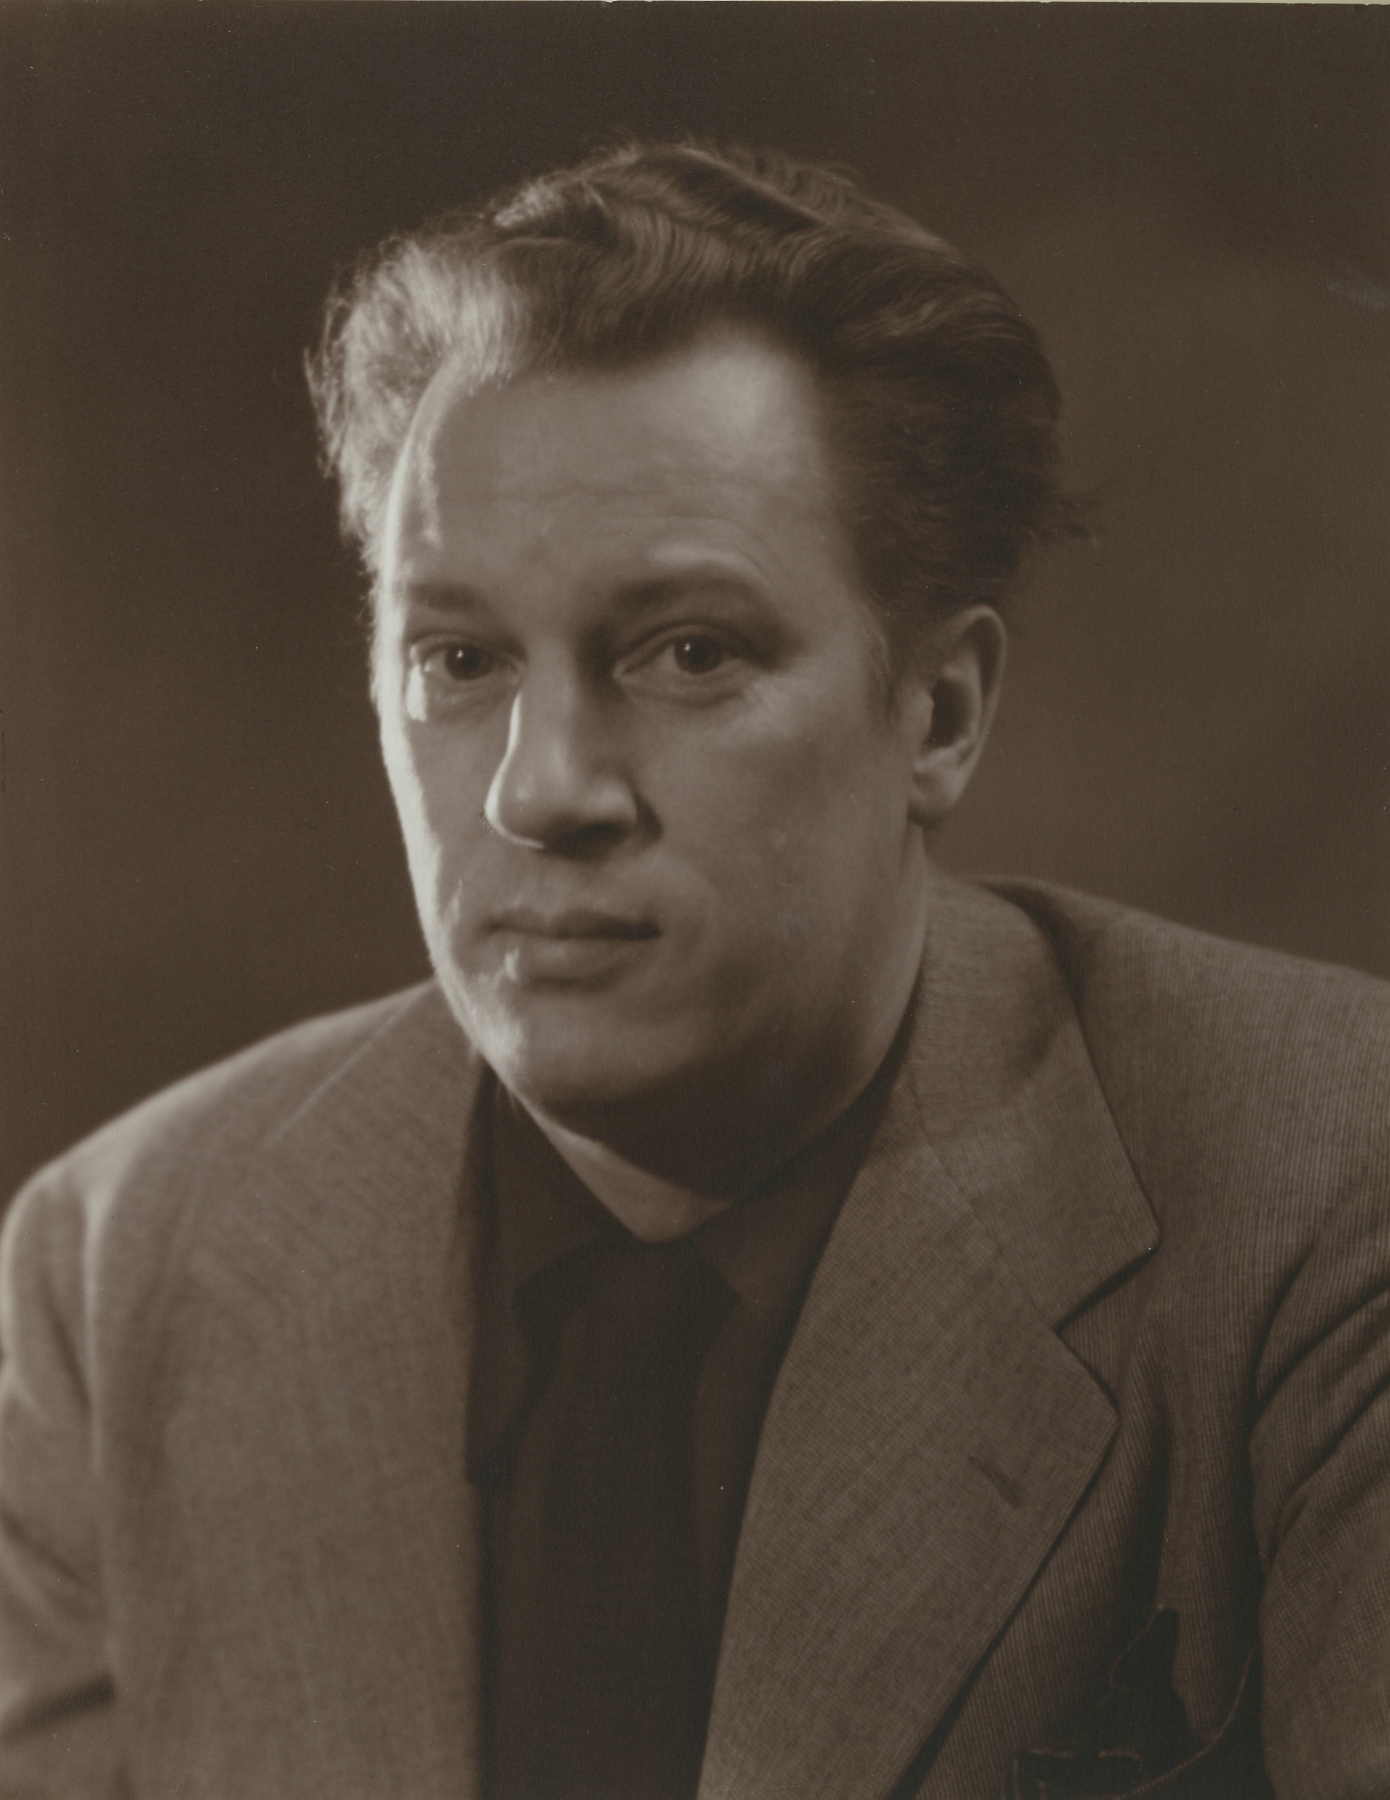 The artist c. 1950.